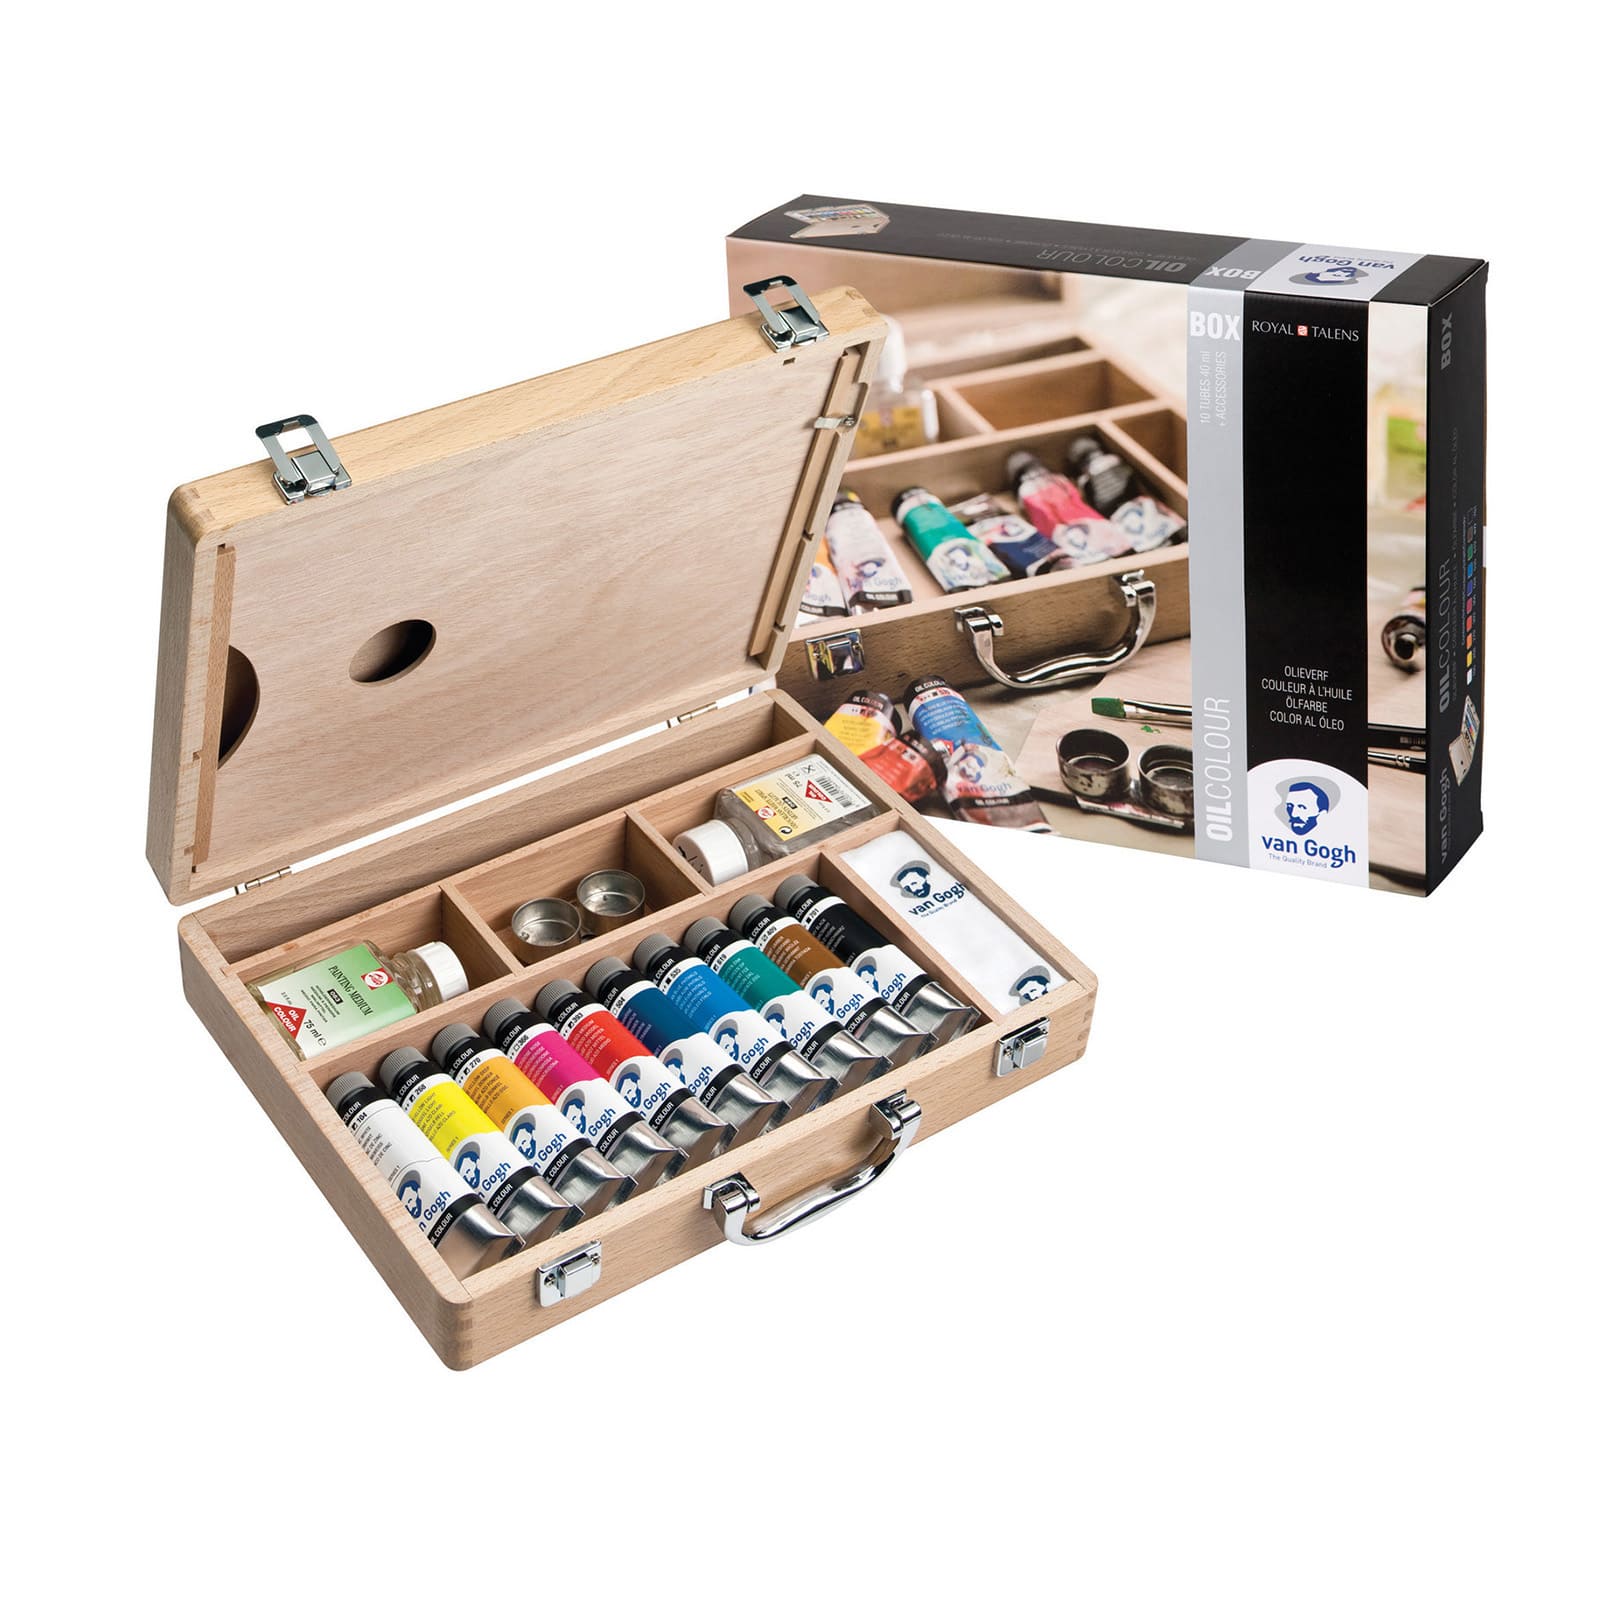 Royal Talens Van Gogh Basic Oils Box Gift Set